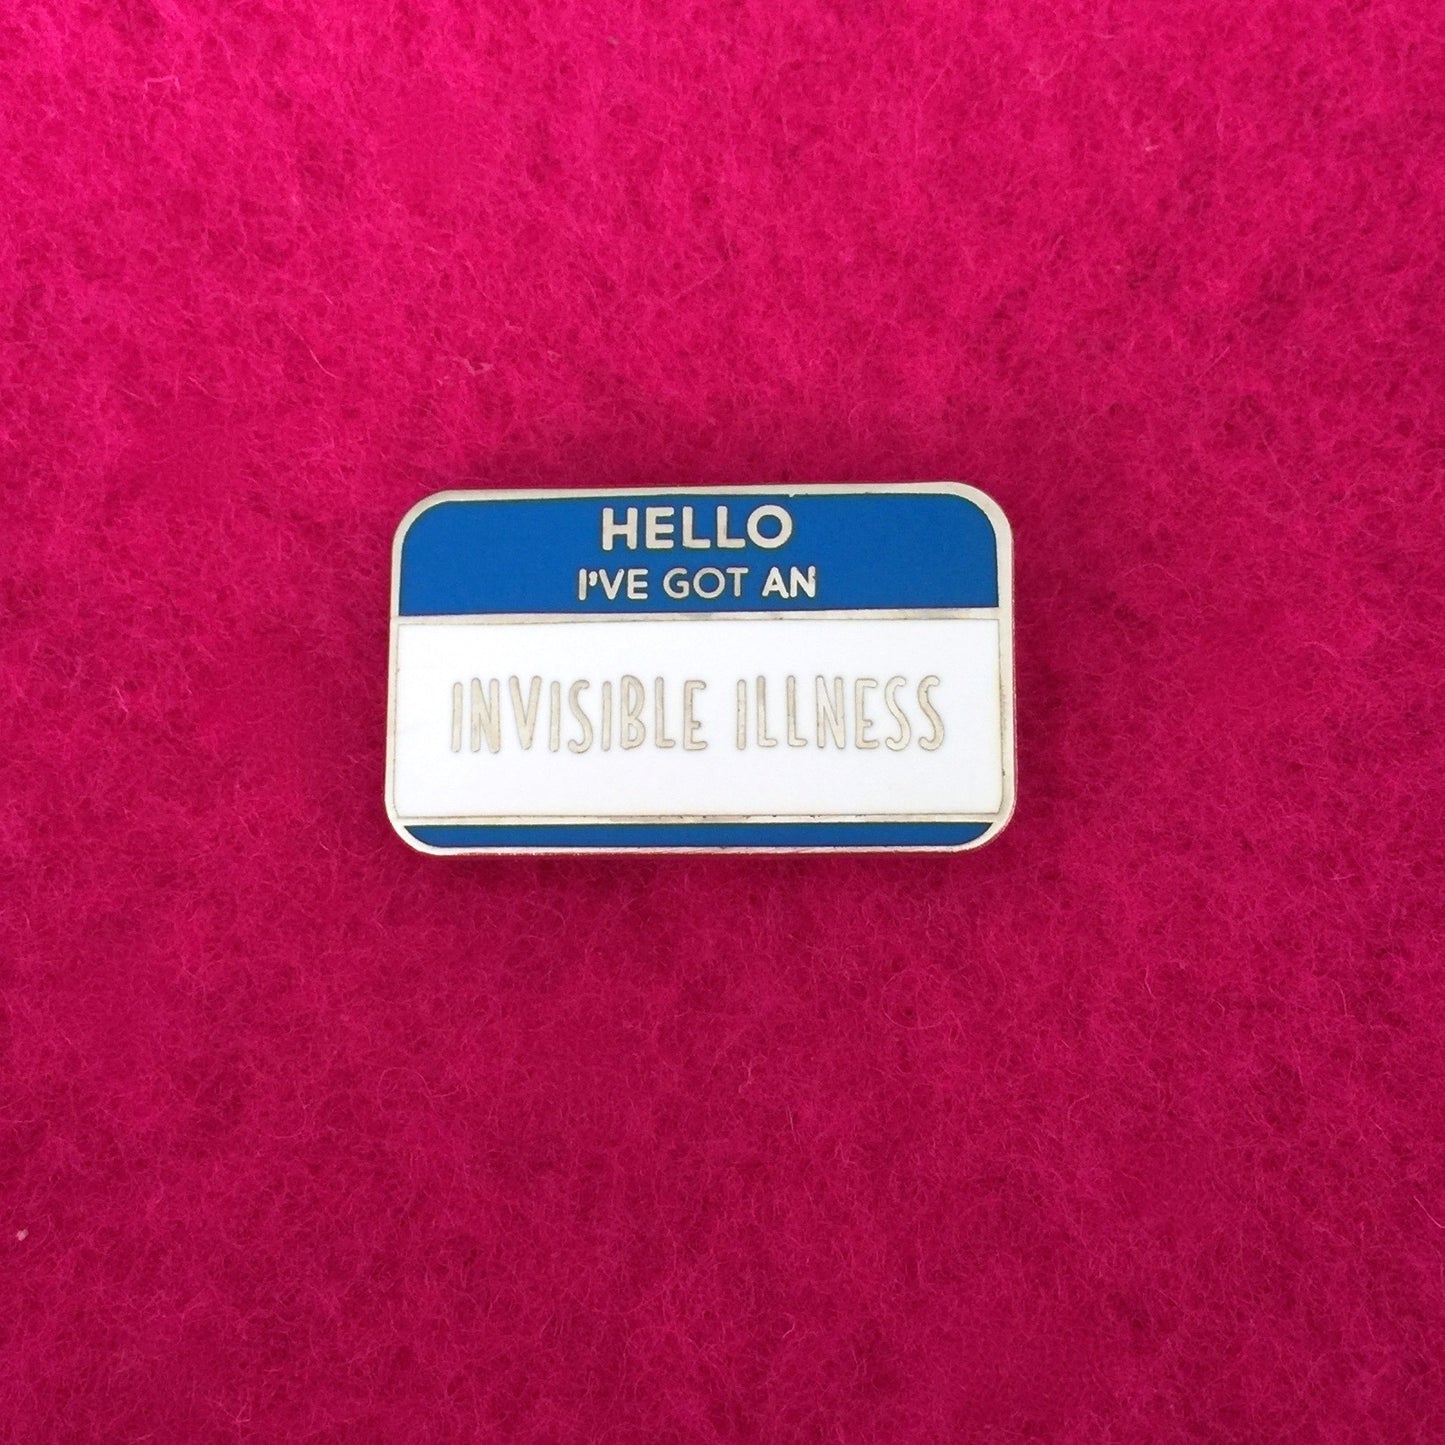 Invisible Illness Pin